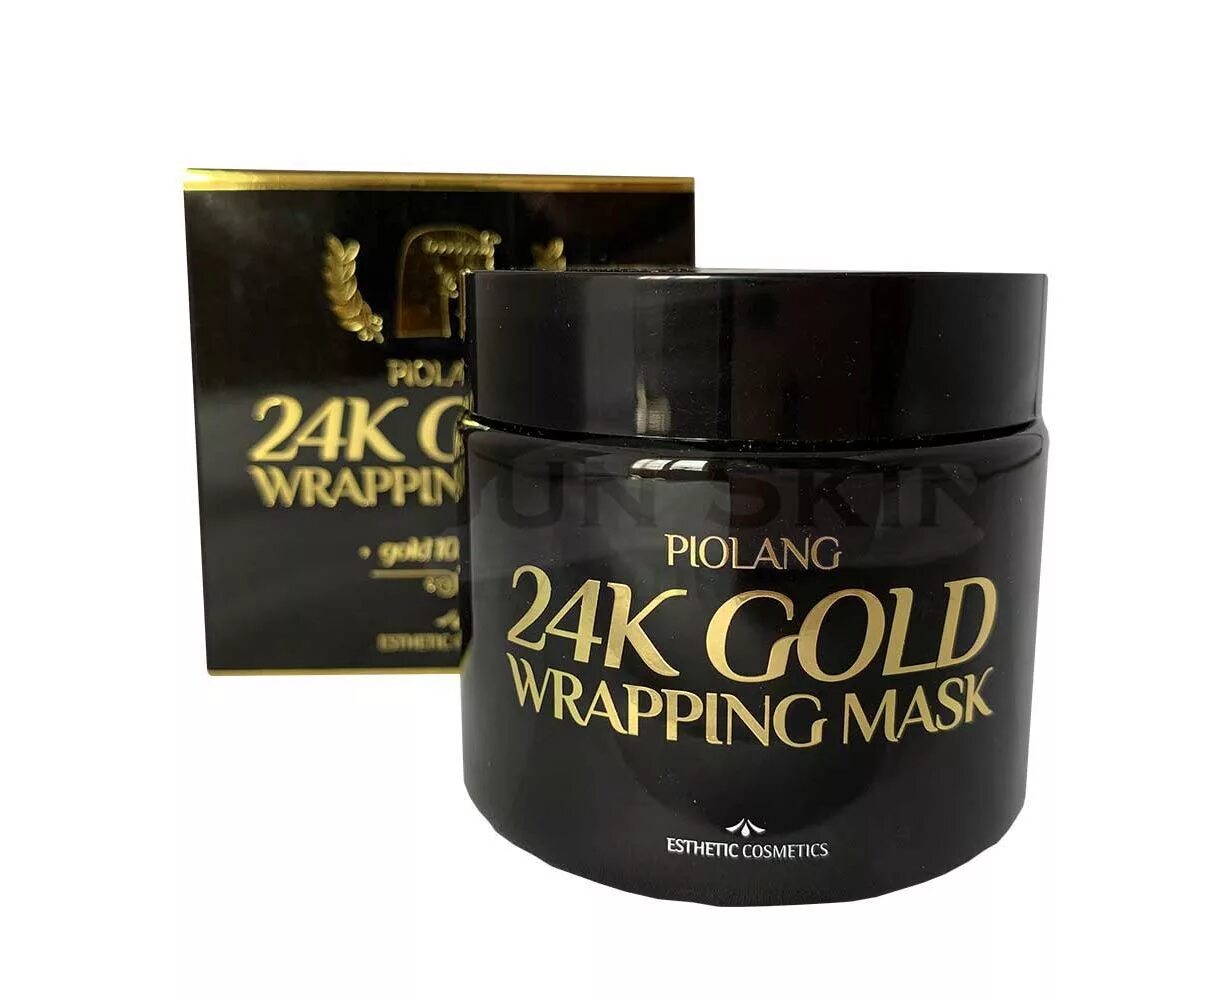 Esthetic House Piolang 24k Gold Wrapping Mask. Маска для лица 24к Gold Корея. Piolang 24k Gold Wrapping Mask маска для лица ТМ Esthetic Cosmetics. Маска для лица 24к Gold Farres.